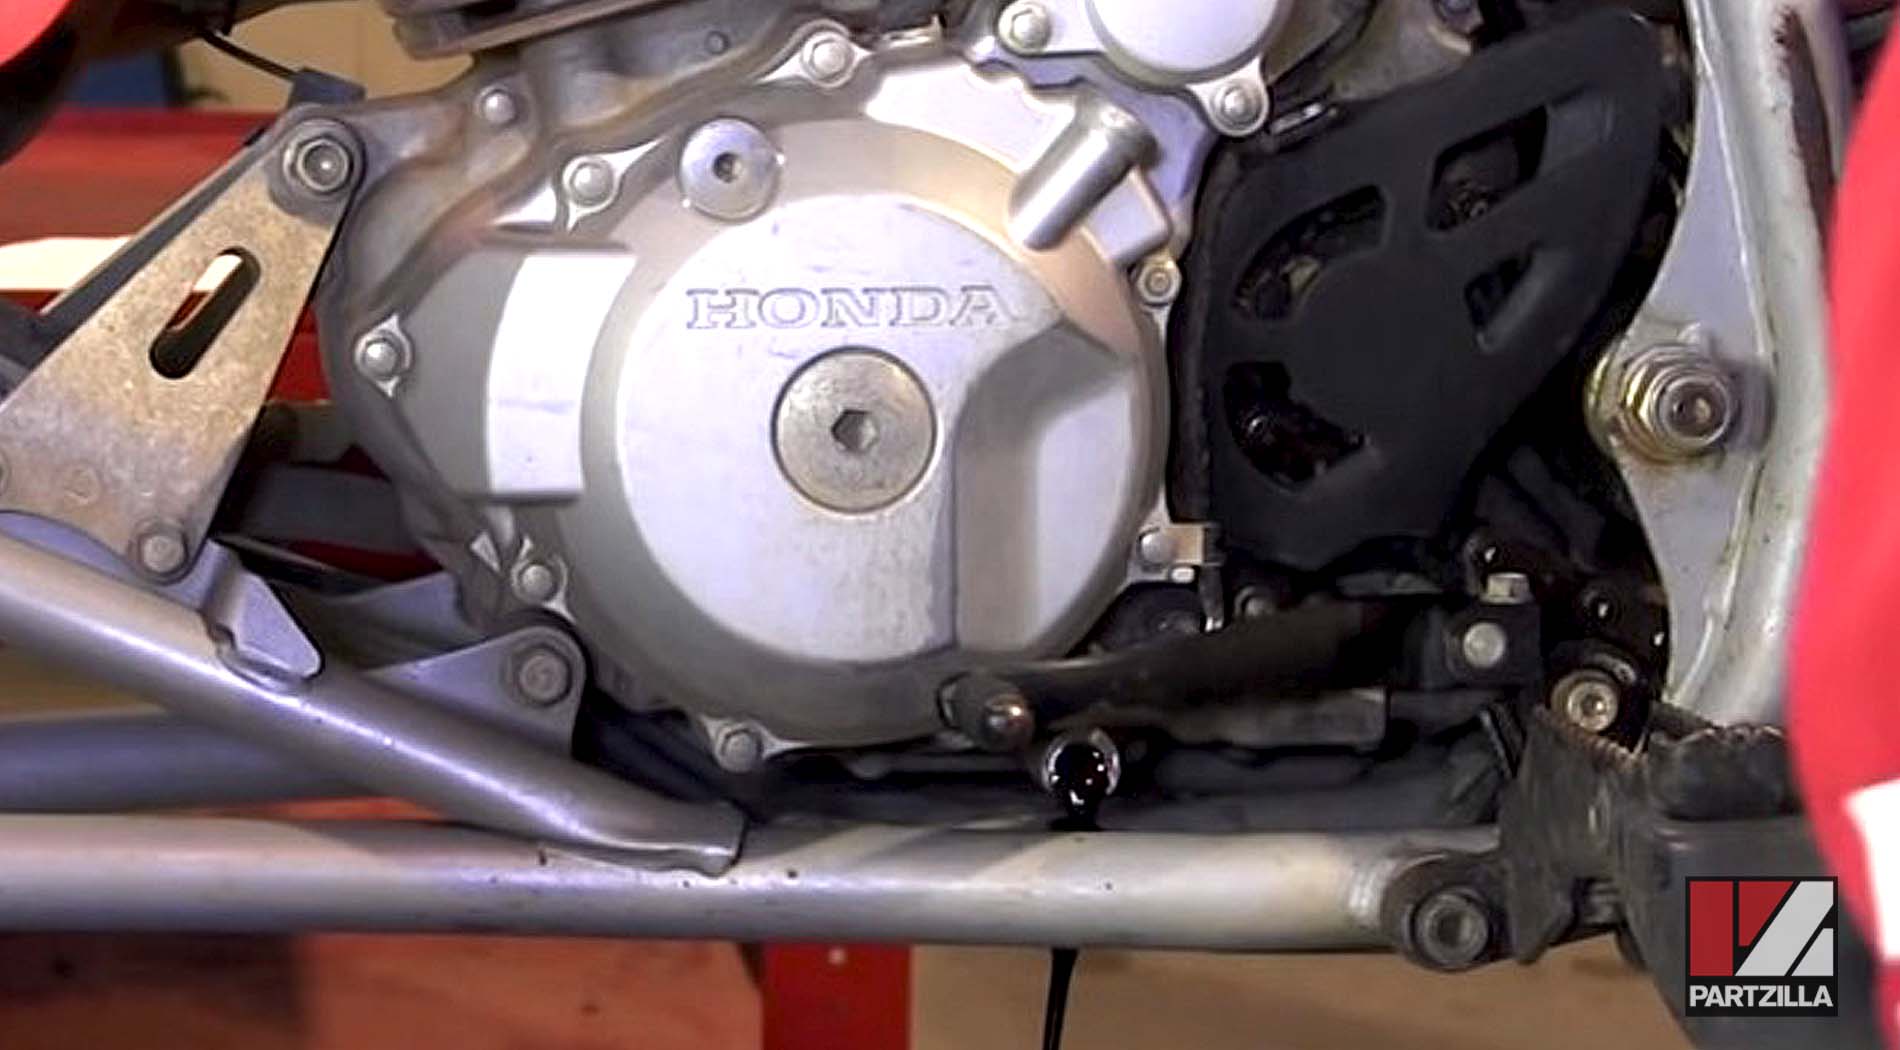 Honda TRX400 ATV engine oil change service